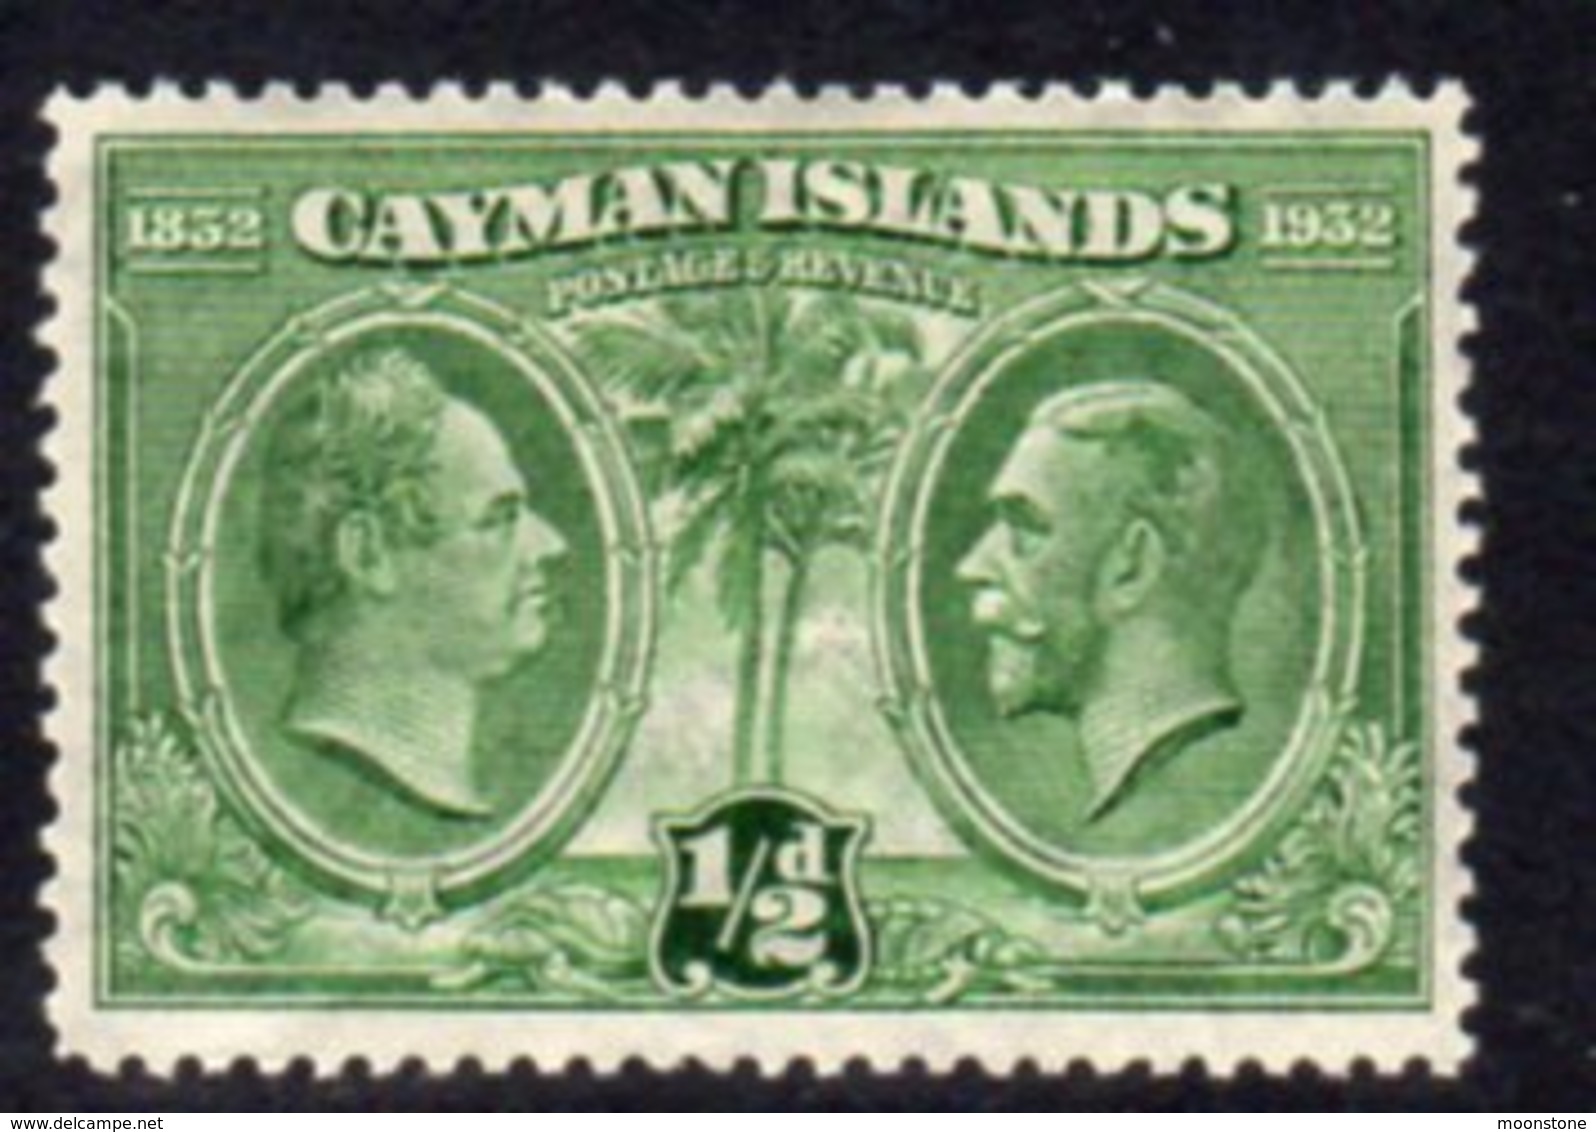 Cayman Islands GV 1932 Centenary Of Assembly ½d Value, Hinged Mint, SG 85 - Cayman Islands